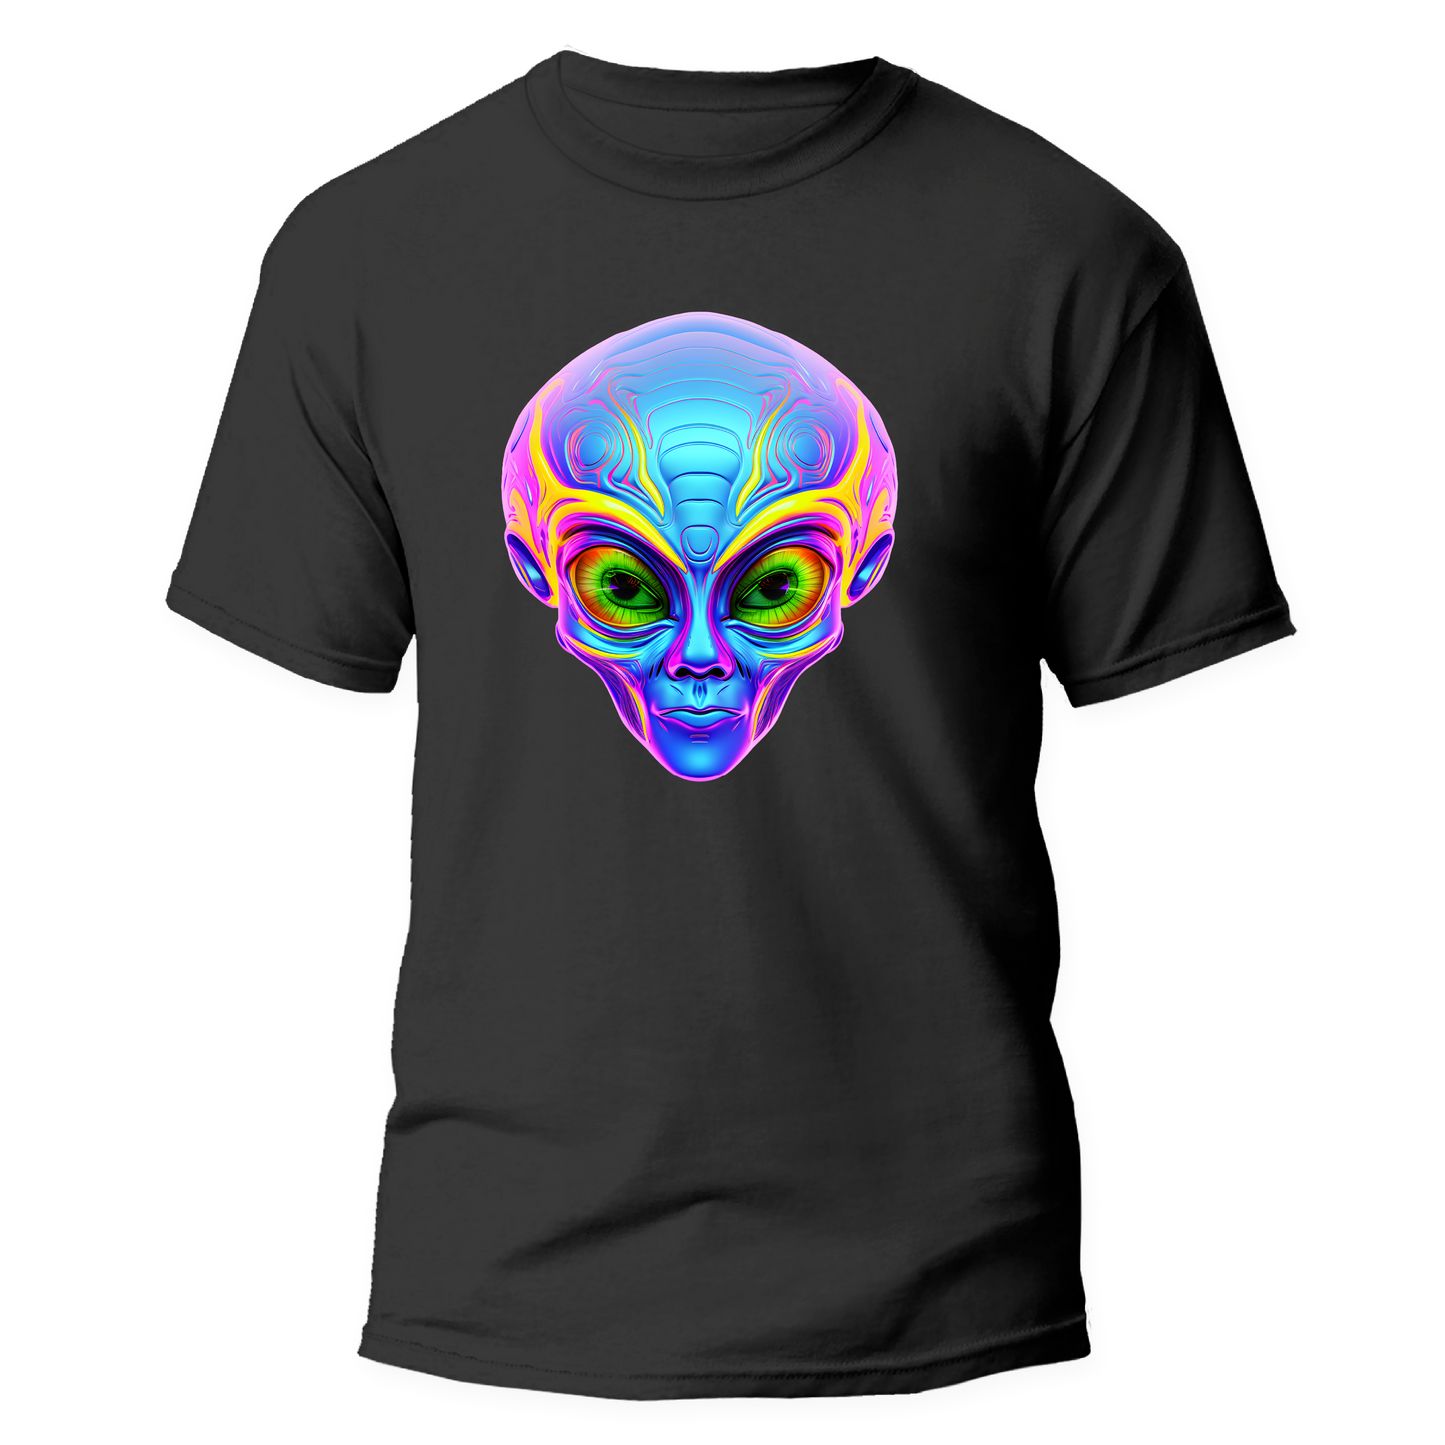 Alien shirt Unisex